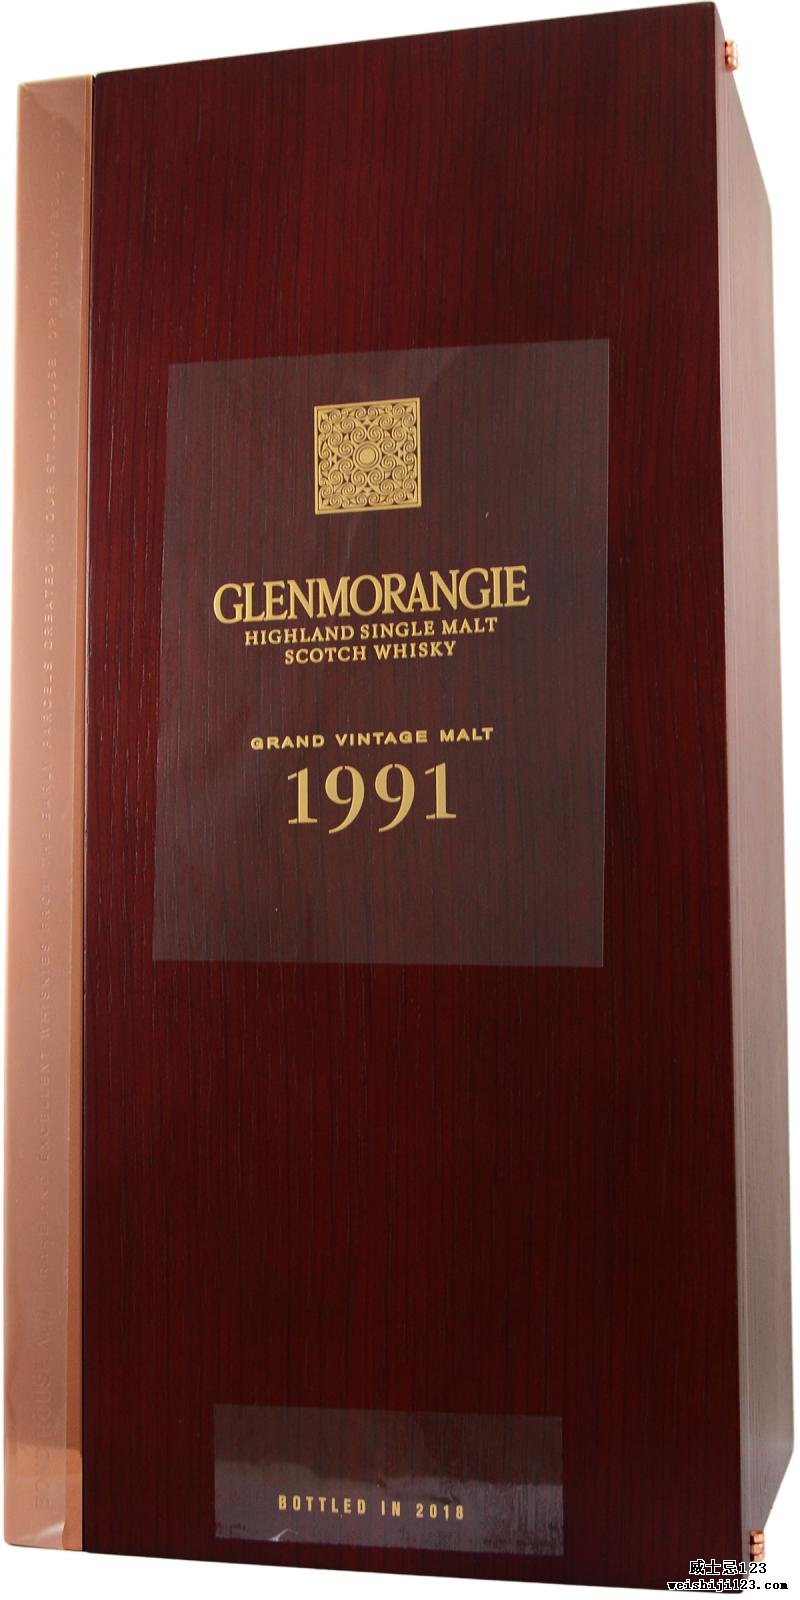 Glenmorangie 1991 - Grand Vintage Malt